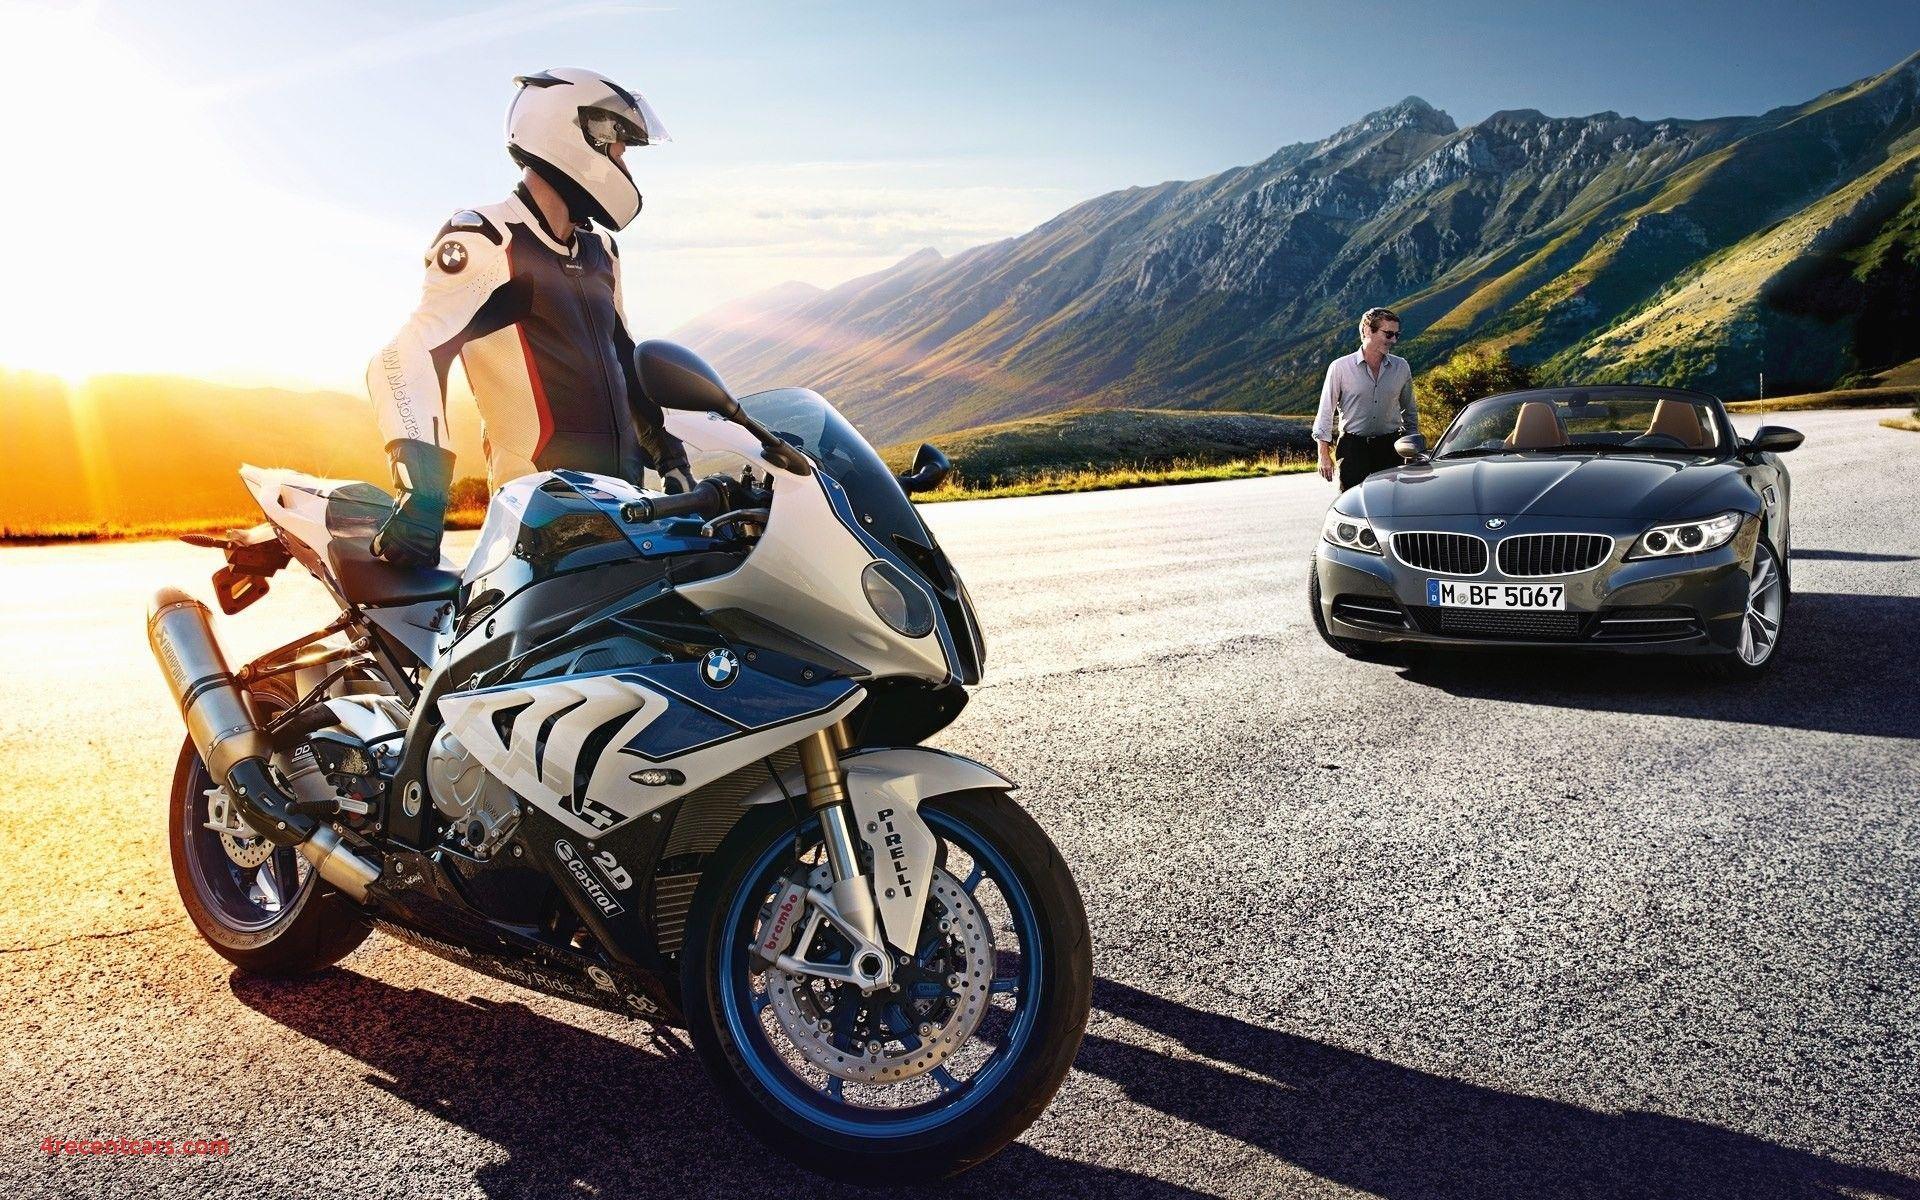 BMW Motorcycle Wallpaper Free BMW Motorcycle